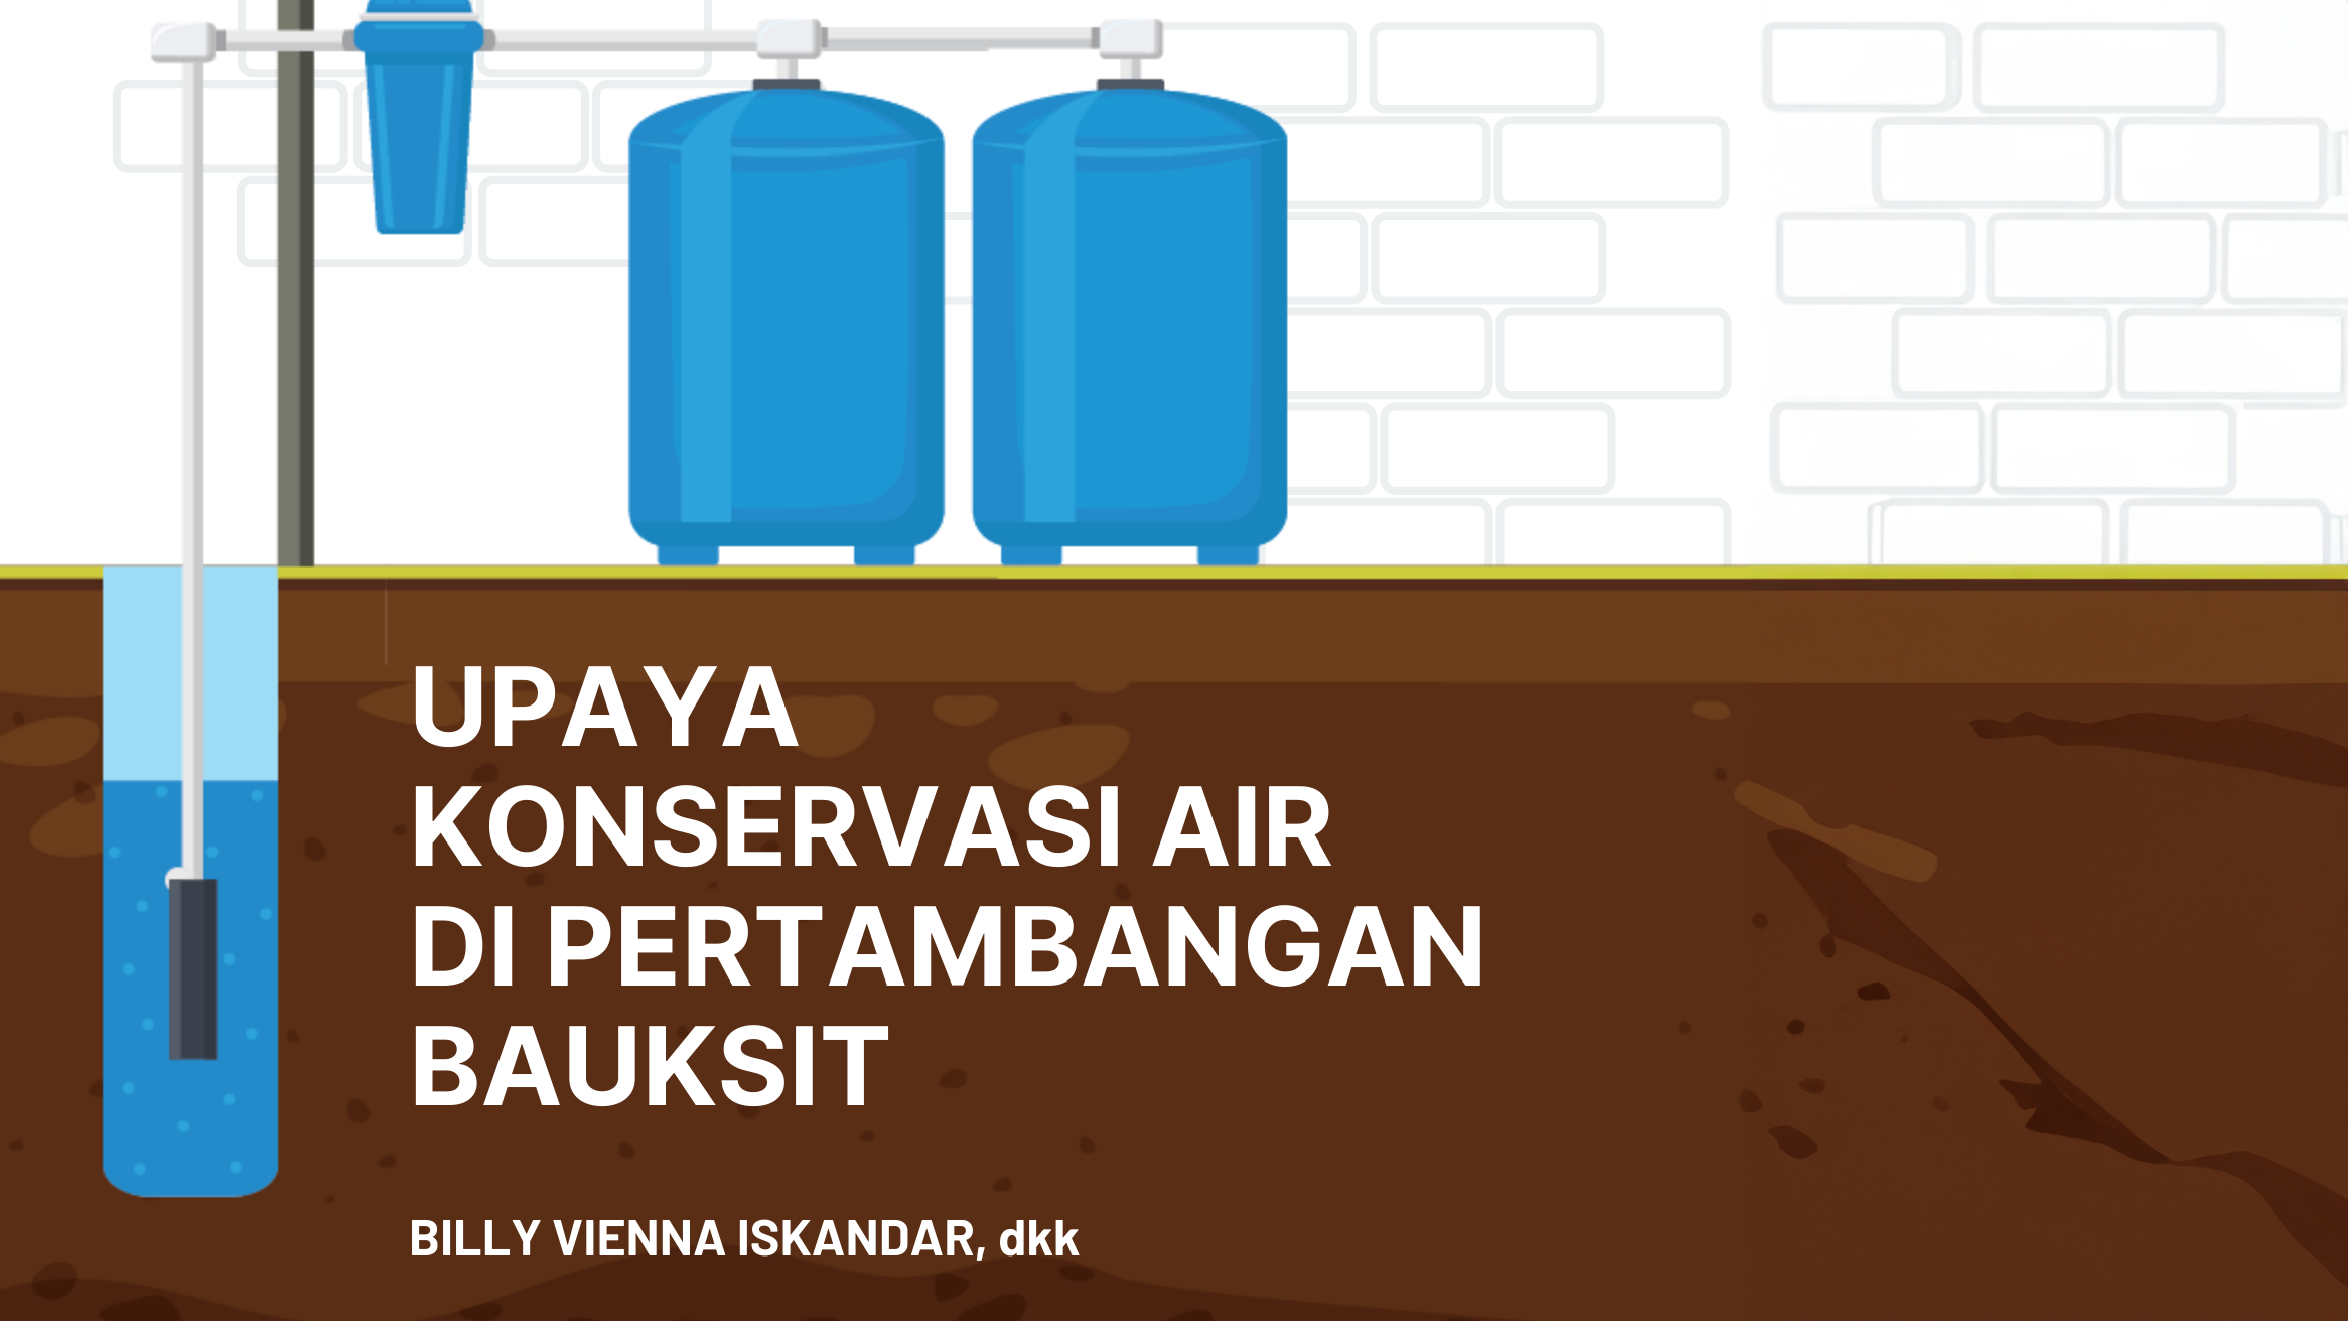 Upaya Konservasi Air di Pertambangan Bauksit